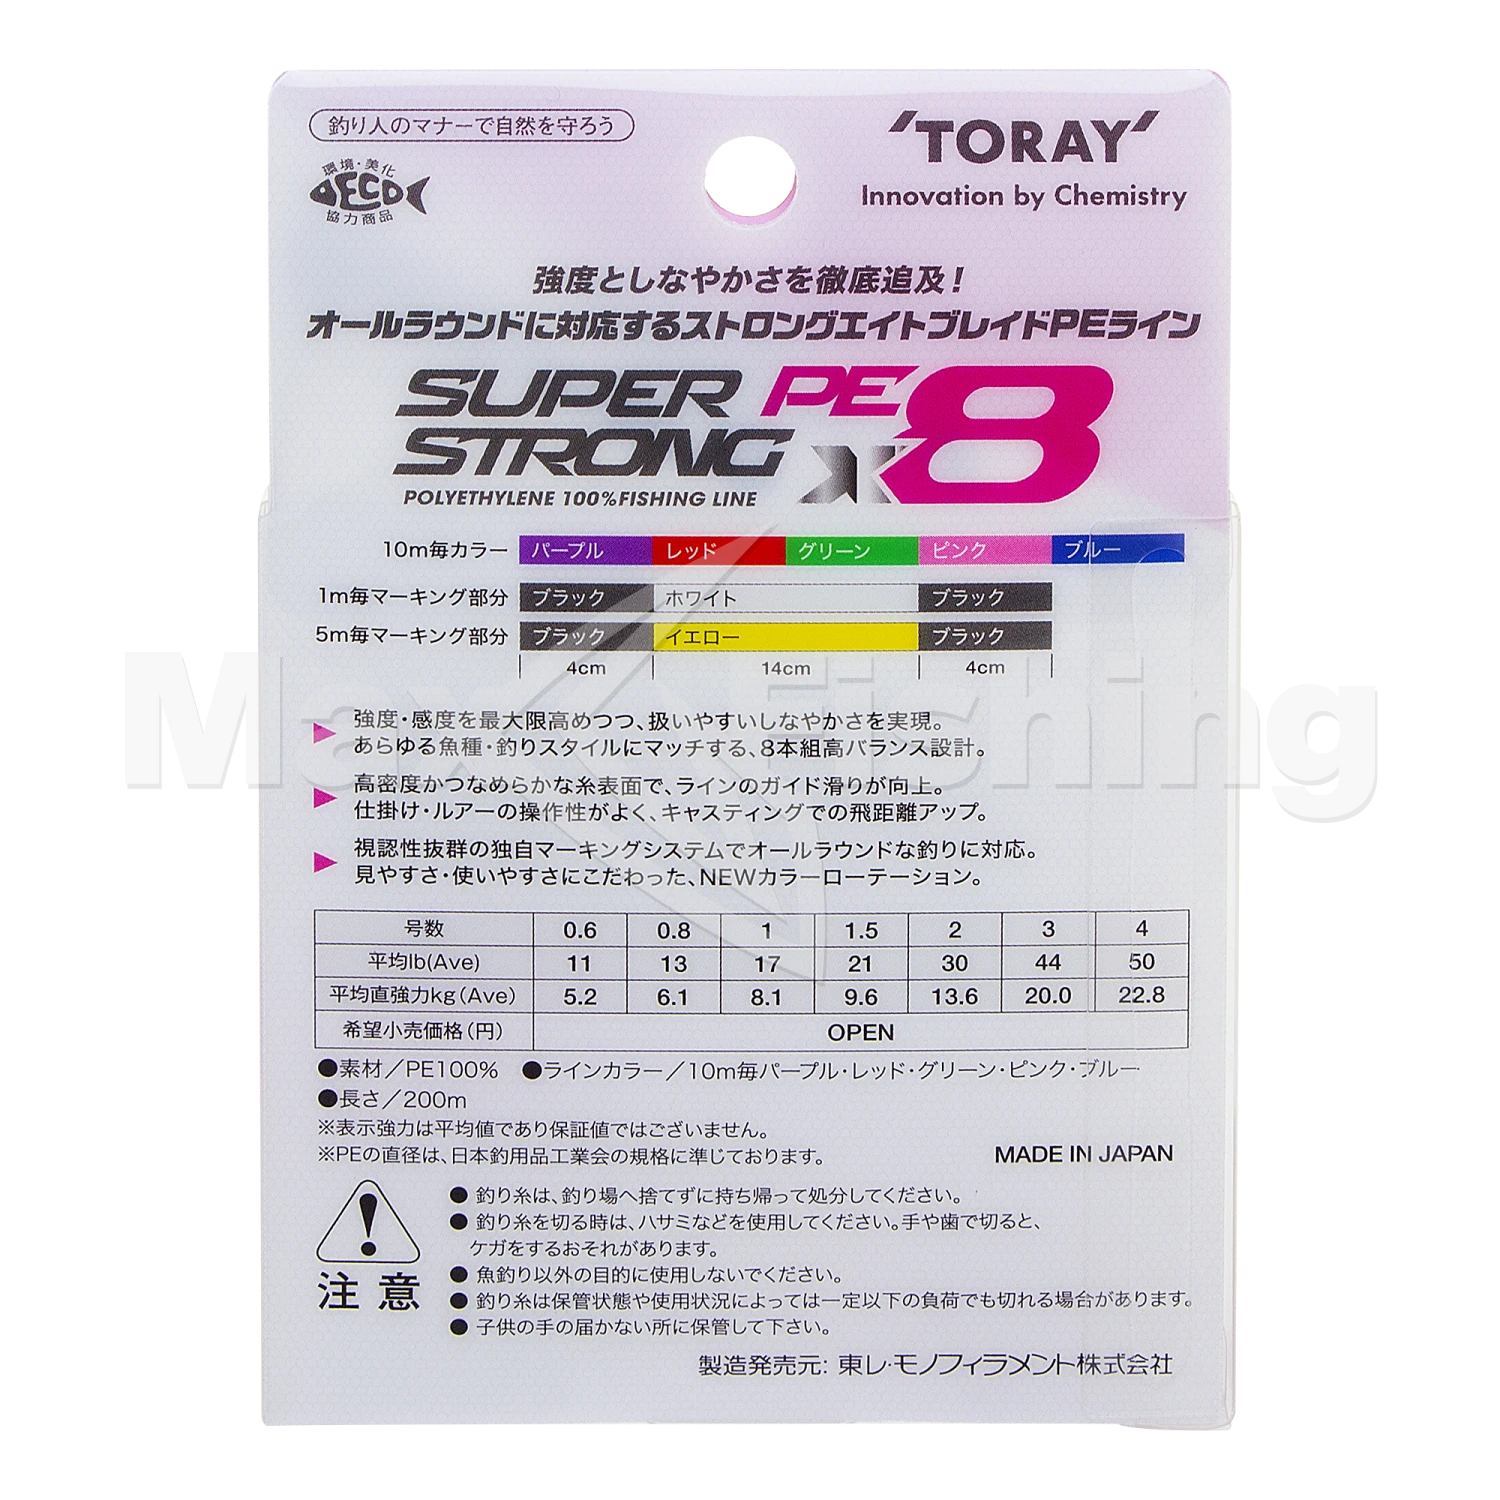 Шнур плетеный Toray Super Strong PE X8 #1 200м (multicolor)